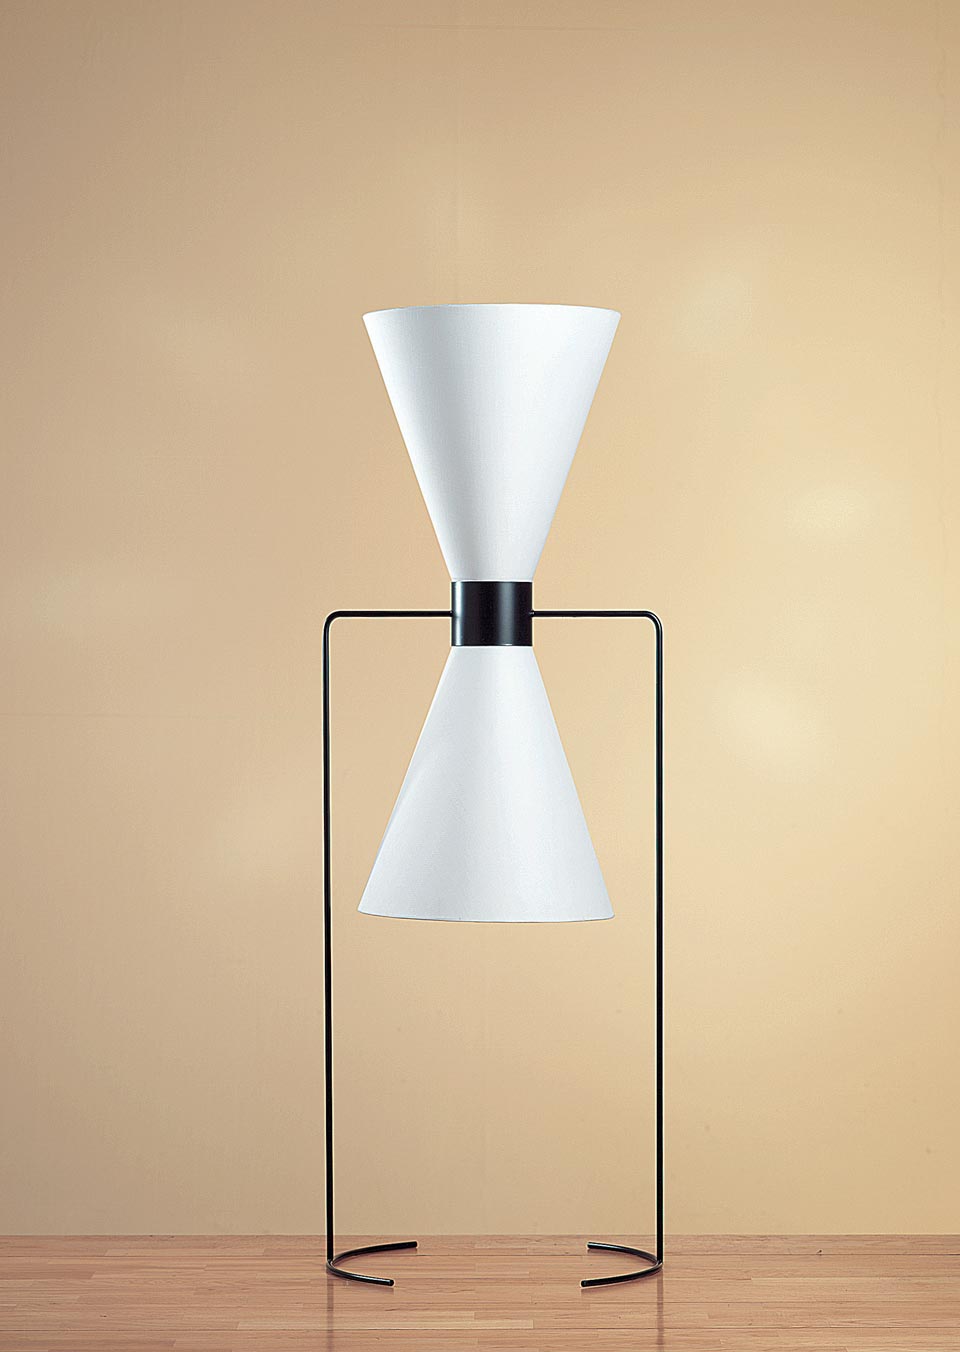 Small Black And White Design Floor Lamp